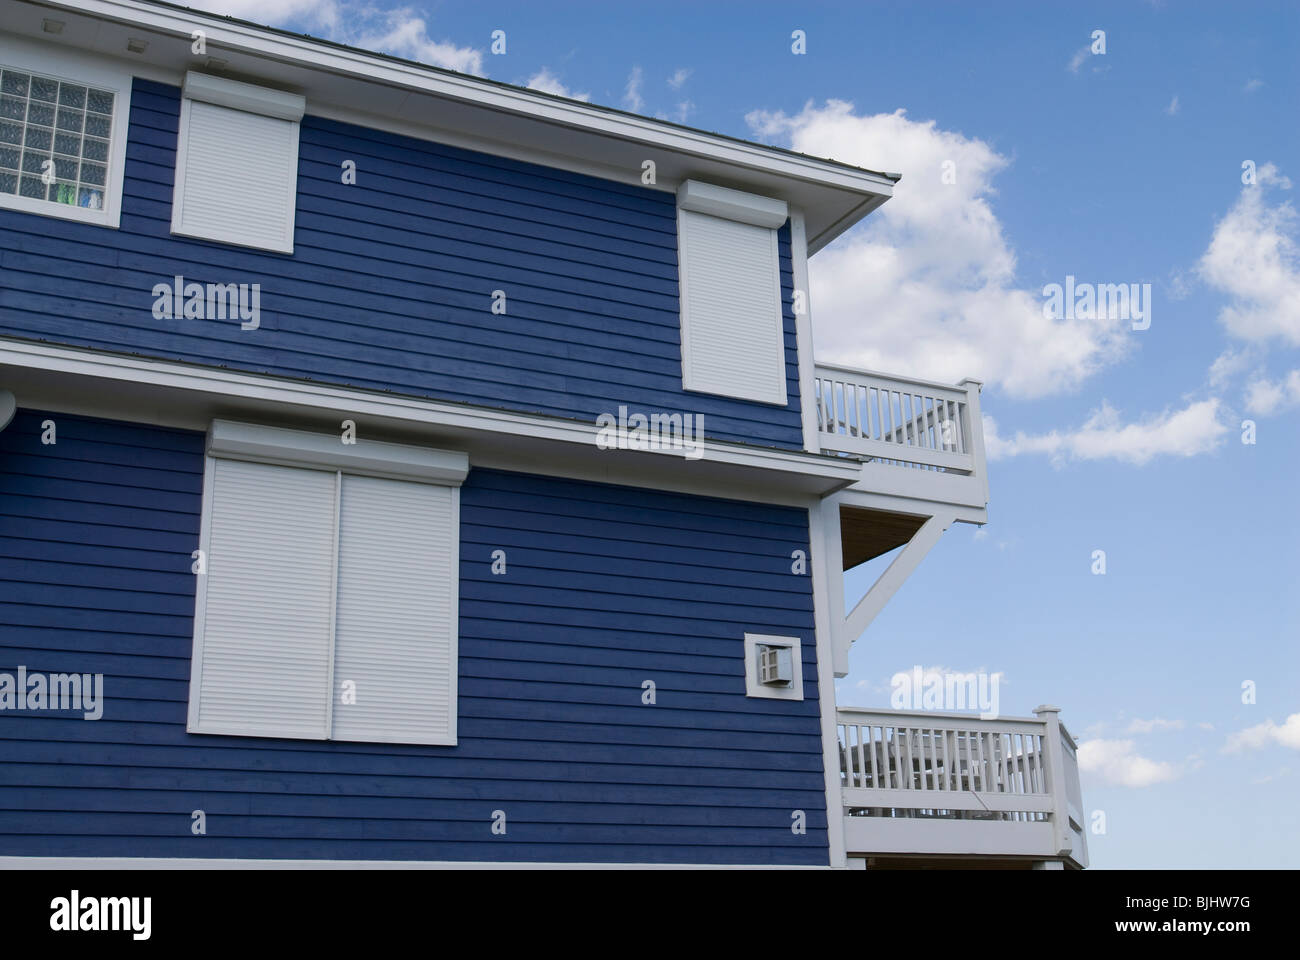 Beach home with hurricane shutters over windows. Stock Photo